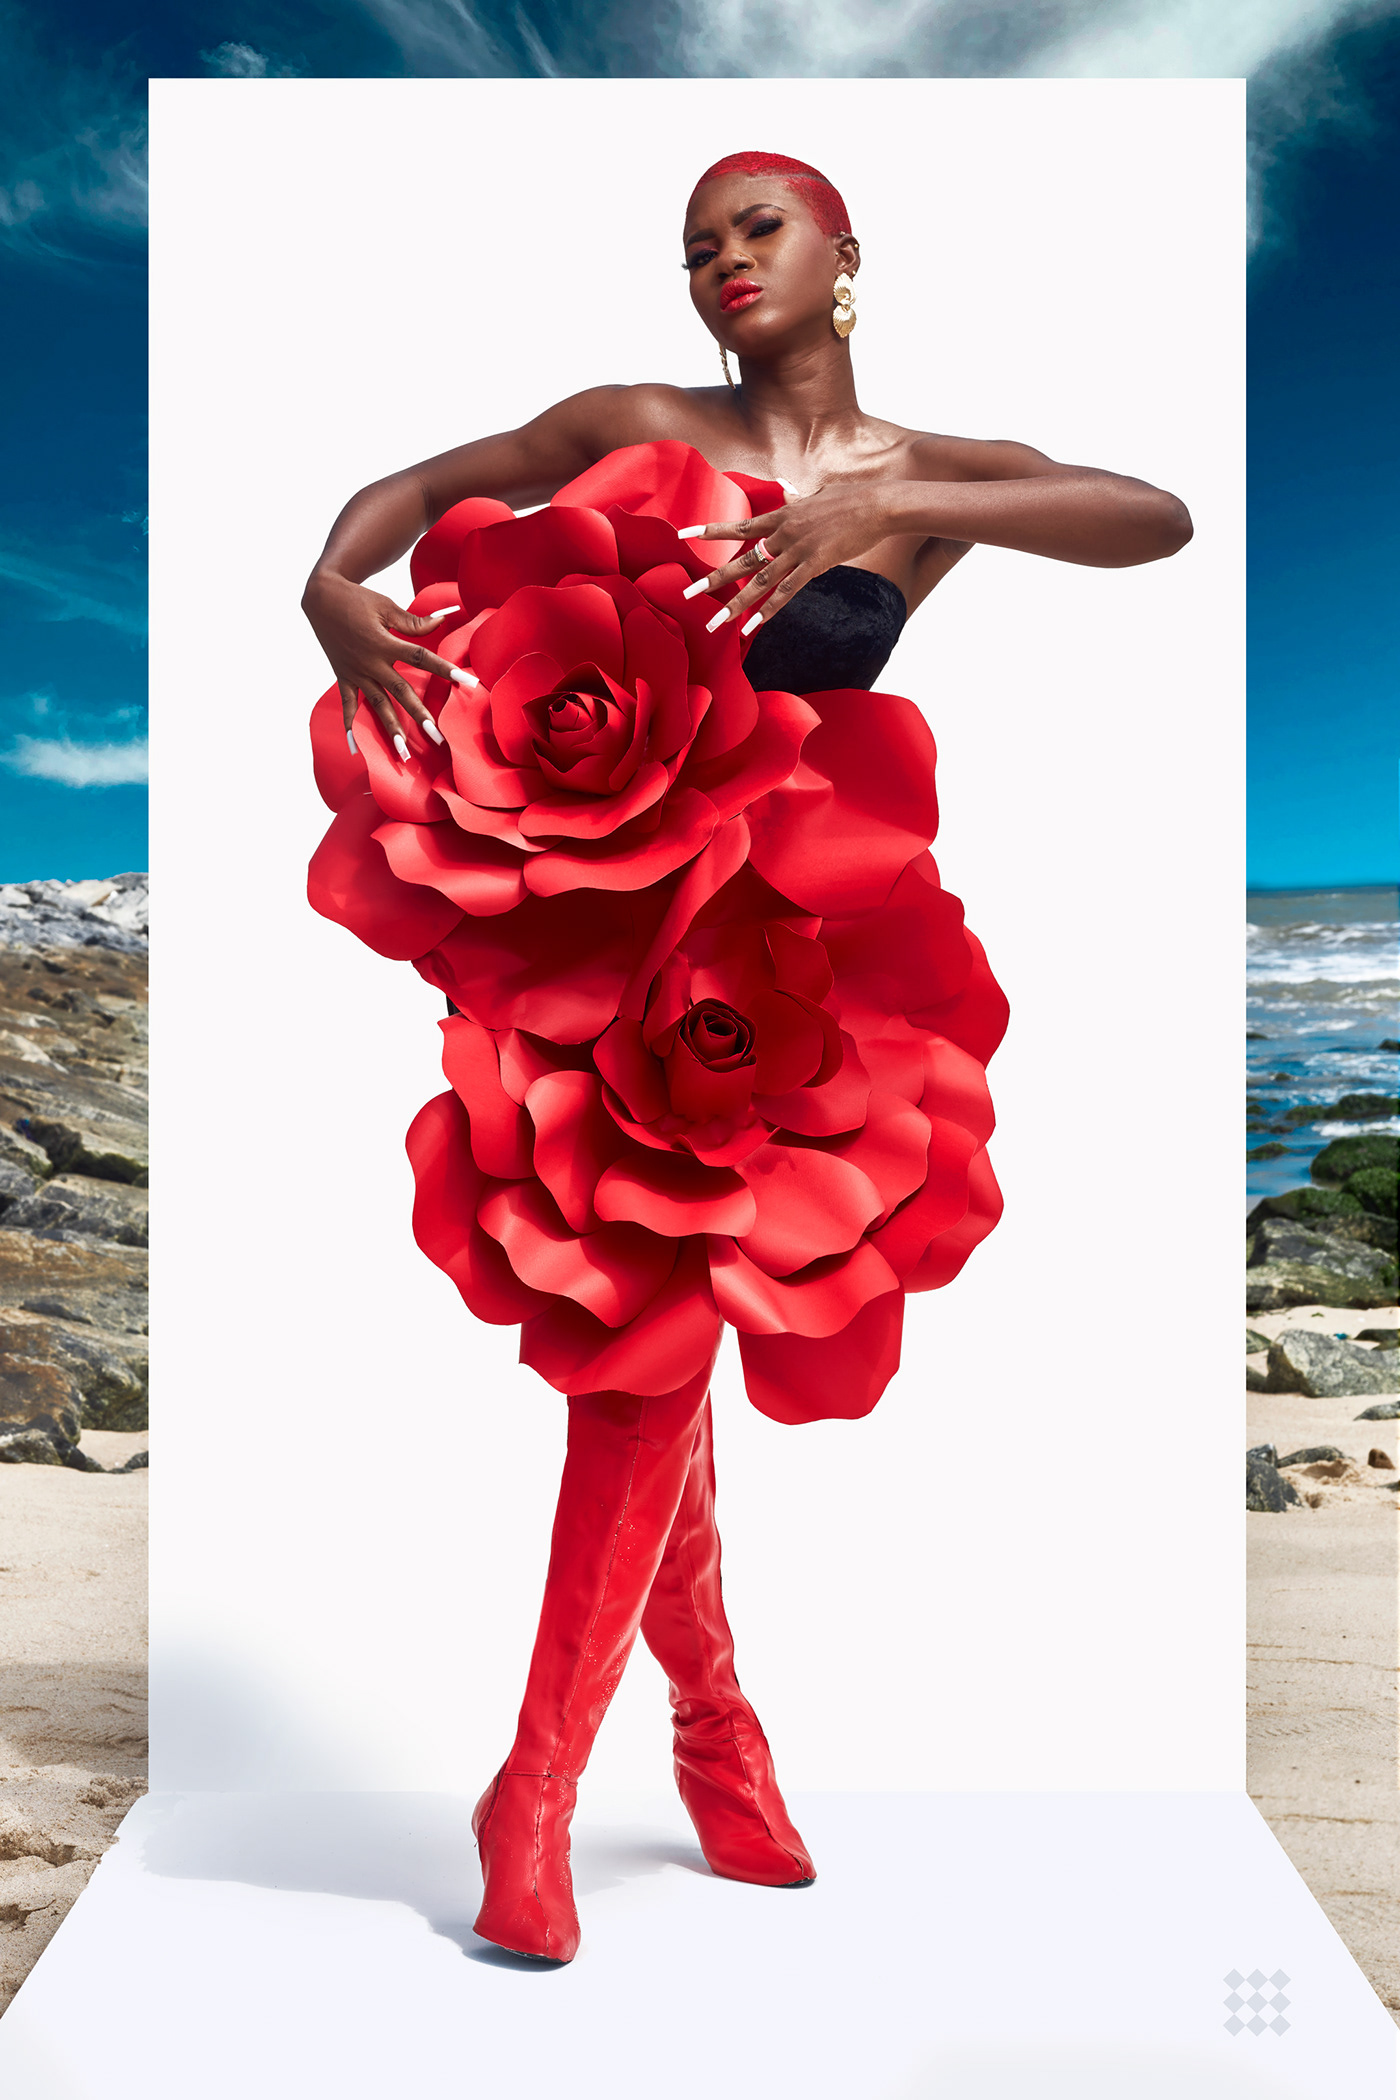 rose melanin Photography  photoshoot beauty editorial beach Roses fashionmodel rosebud